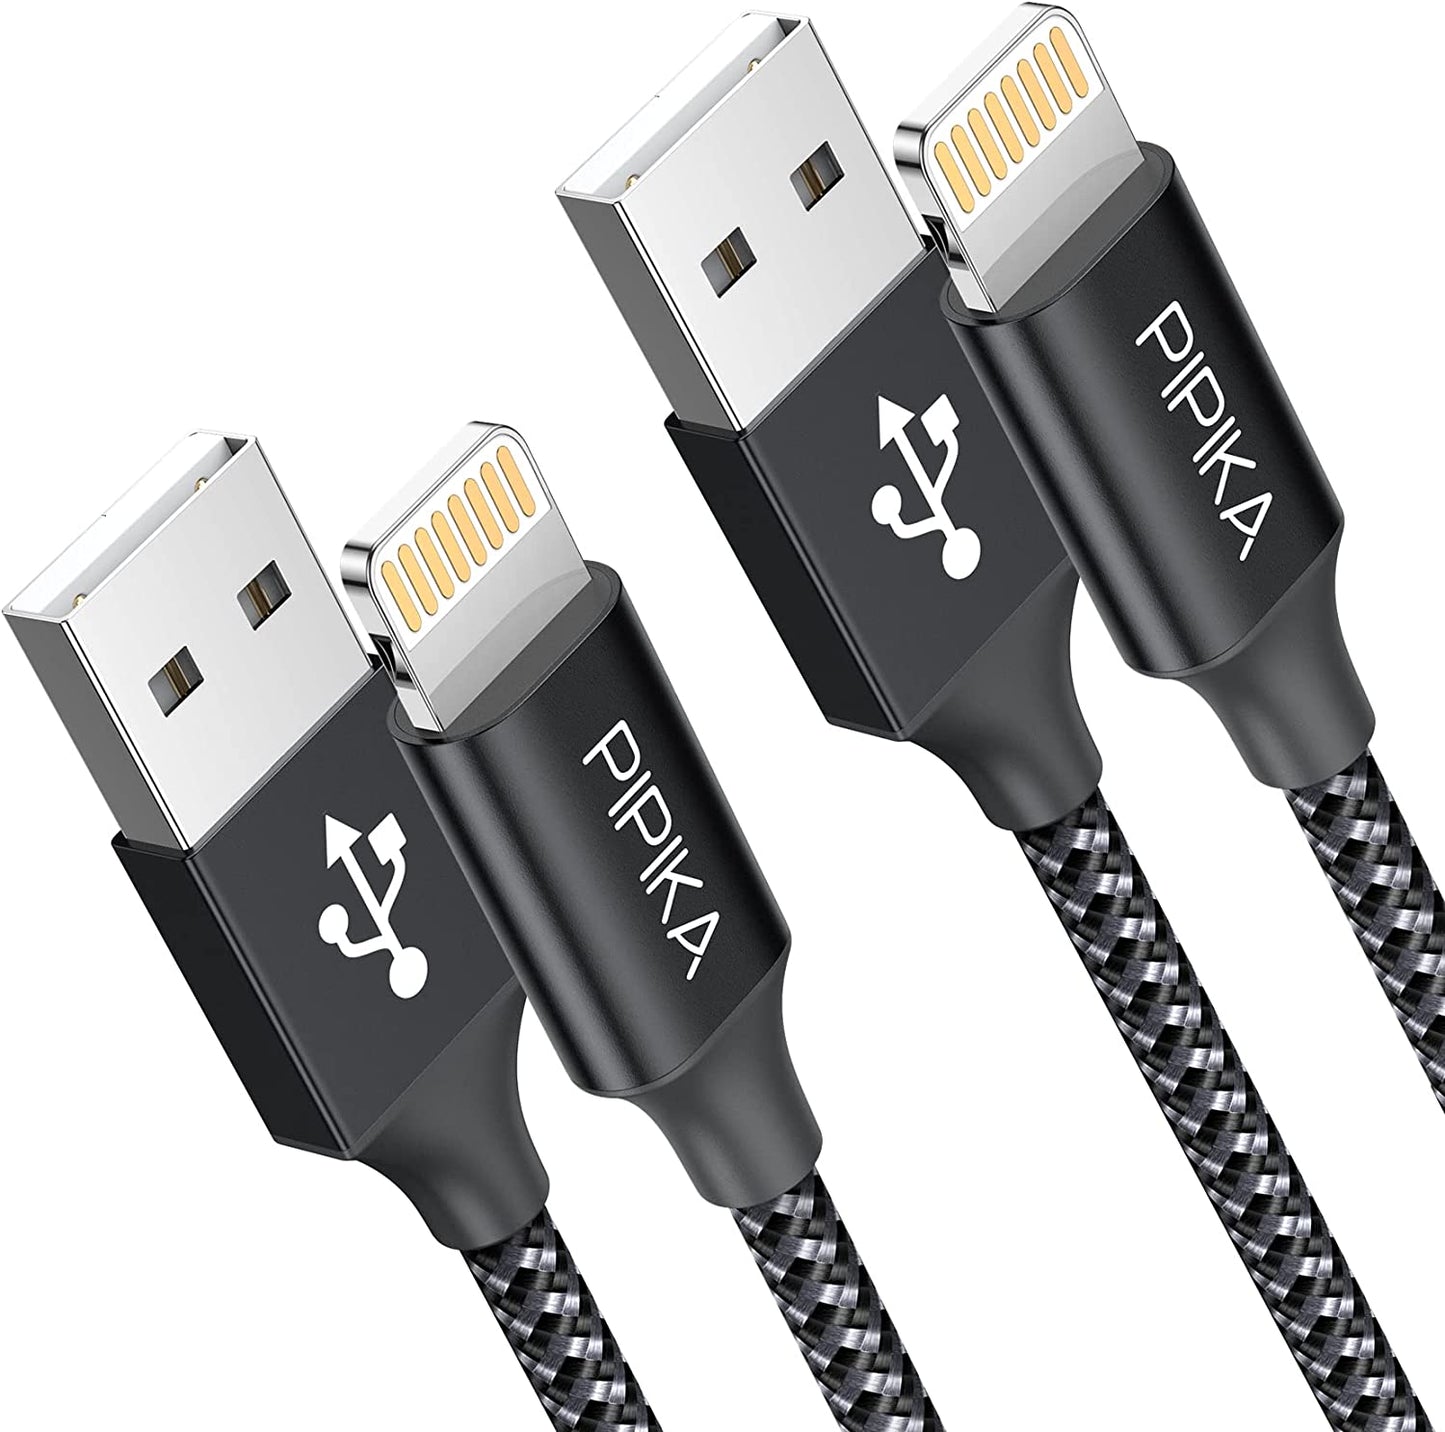 Cable de carga de iPhone/Samsung USB a Lightning - Compatible con cualquier iPhone moderno